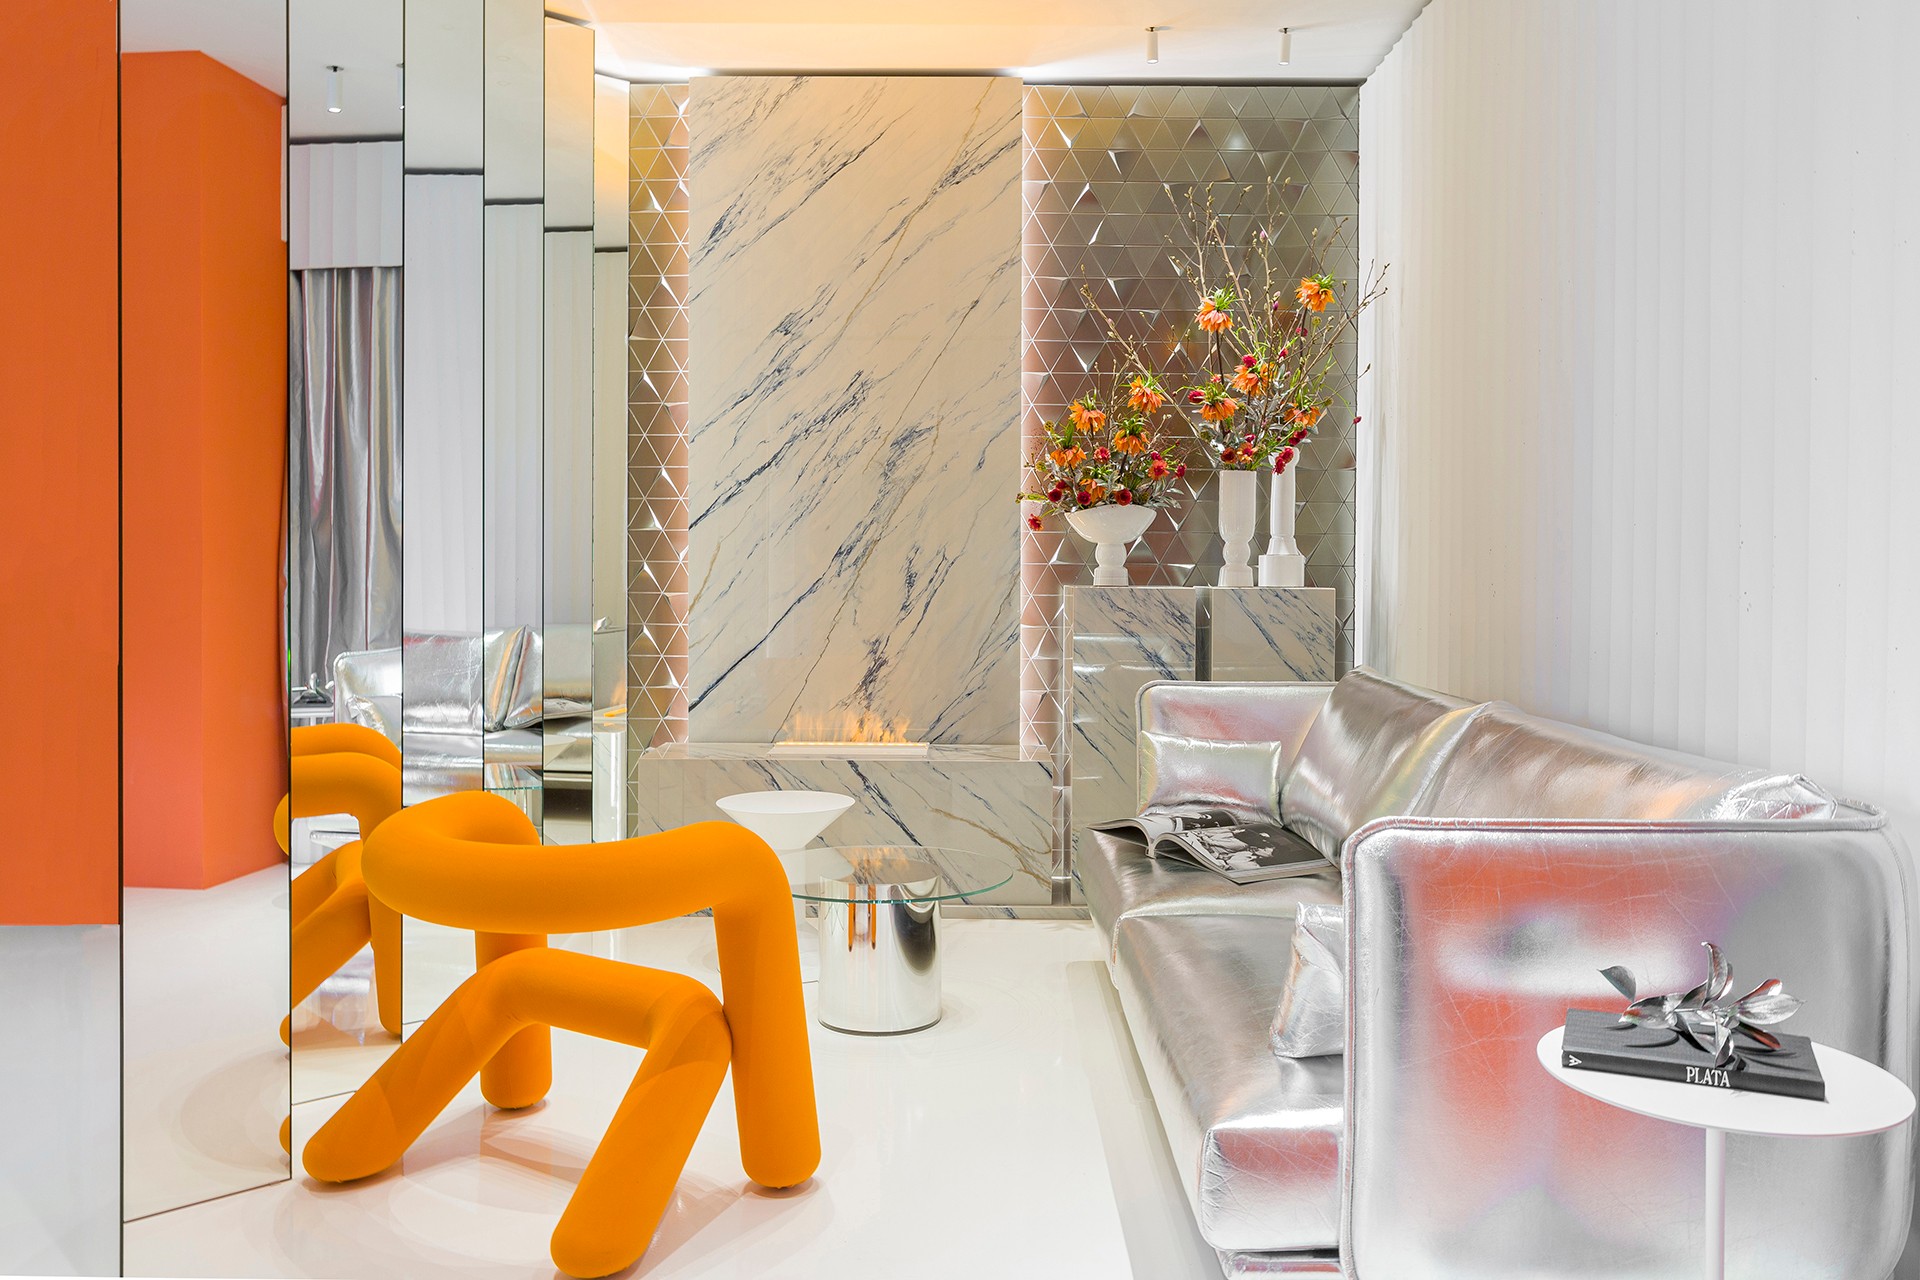 Image of 22. casa decor 2022 espacio sinmas studio salon Bajas1 in A journey to the best of Art Deco Paris through a bathroom - Cosentino